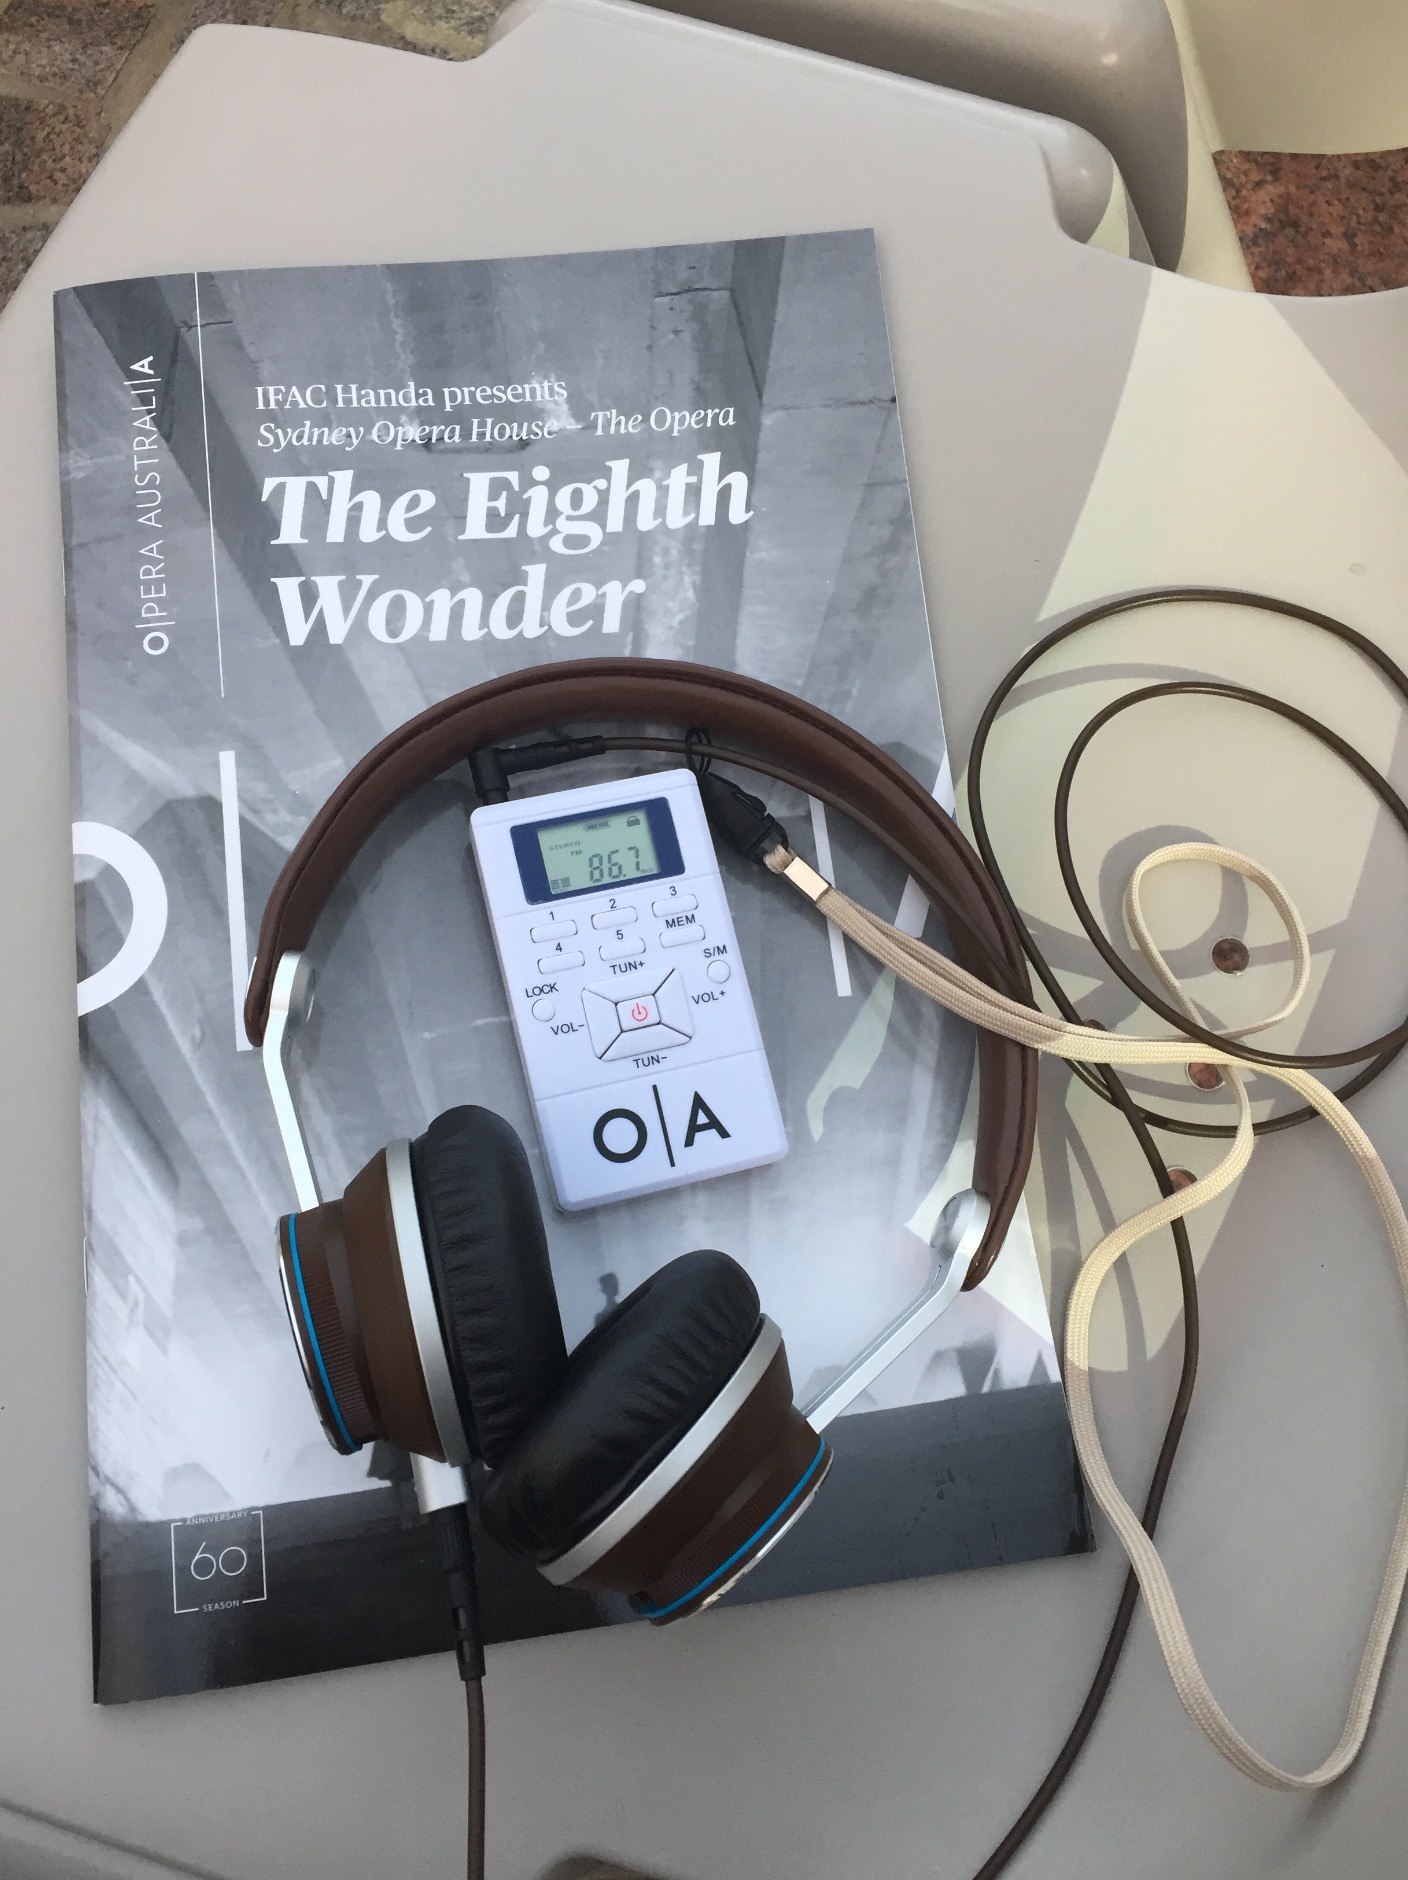 The Eighth Wonder - Headphone and Program